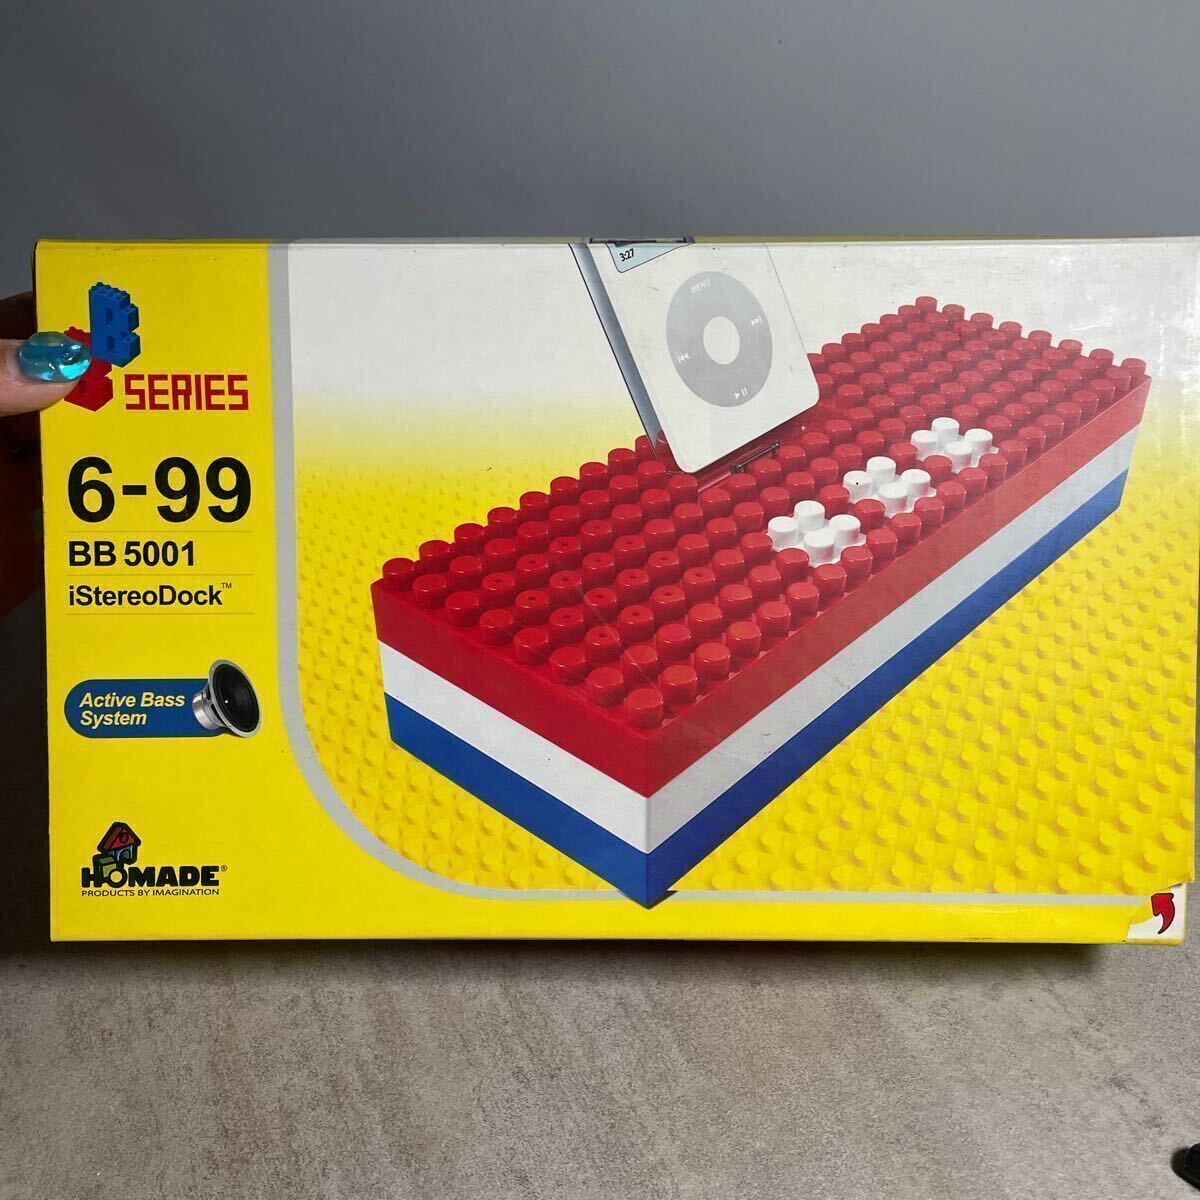 hz102 新品 未使用品 LEGO レゴ レゴブロックipod スピーカー 6-99 BB 5001 大型ブロックスピーカー 便利 オシャレ 黄色 ポータブル _画像2